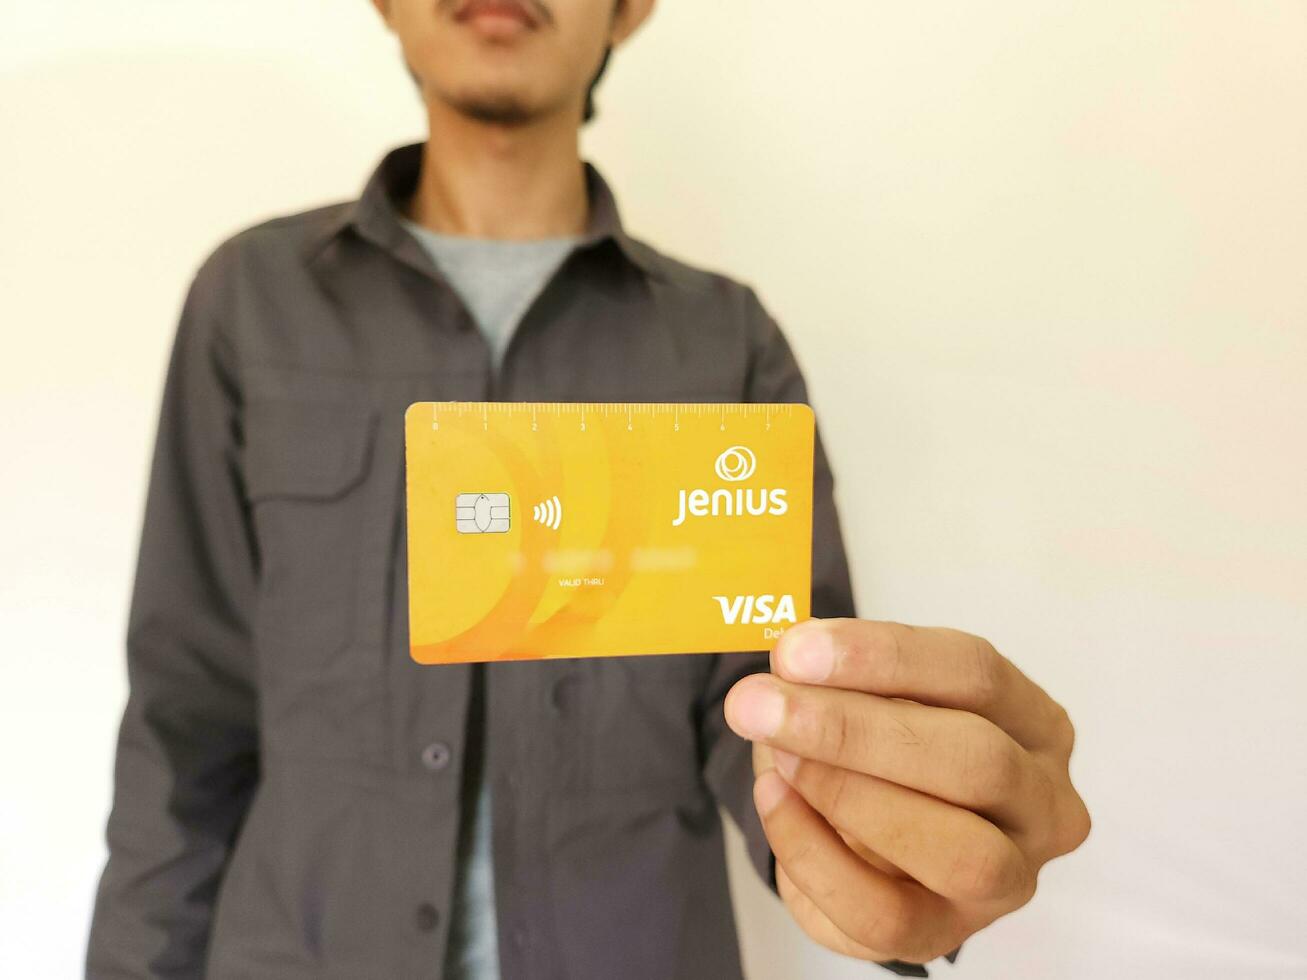 uomo mostrando genio carta, digitale bancario, addebito carte foto